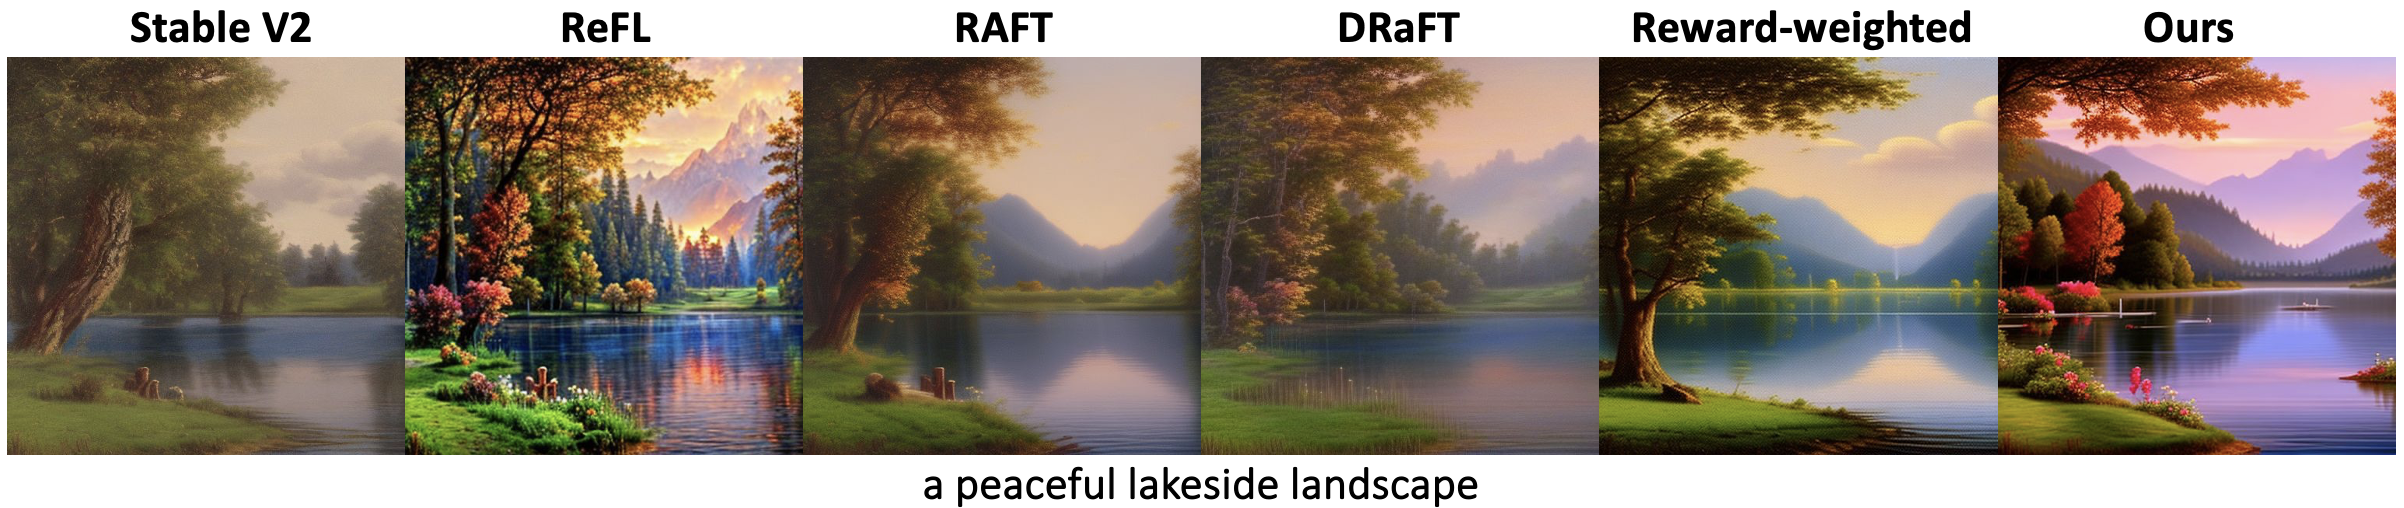 A peaceful lakeside landscape